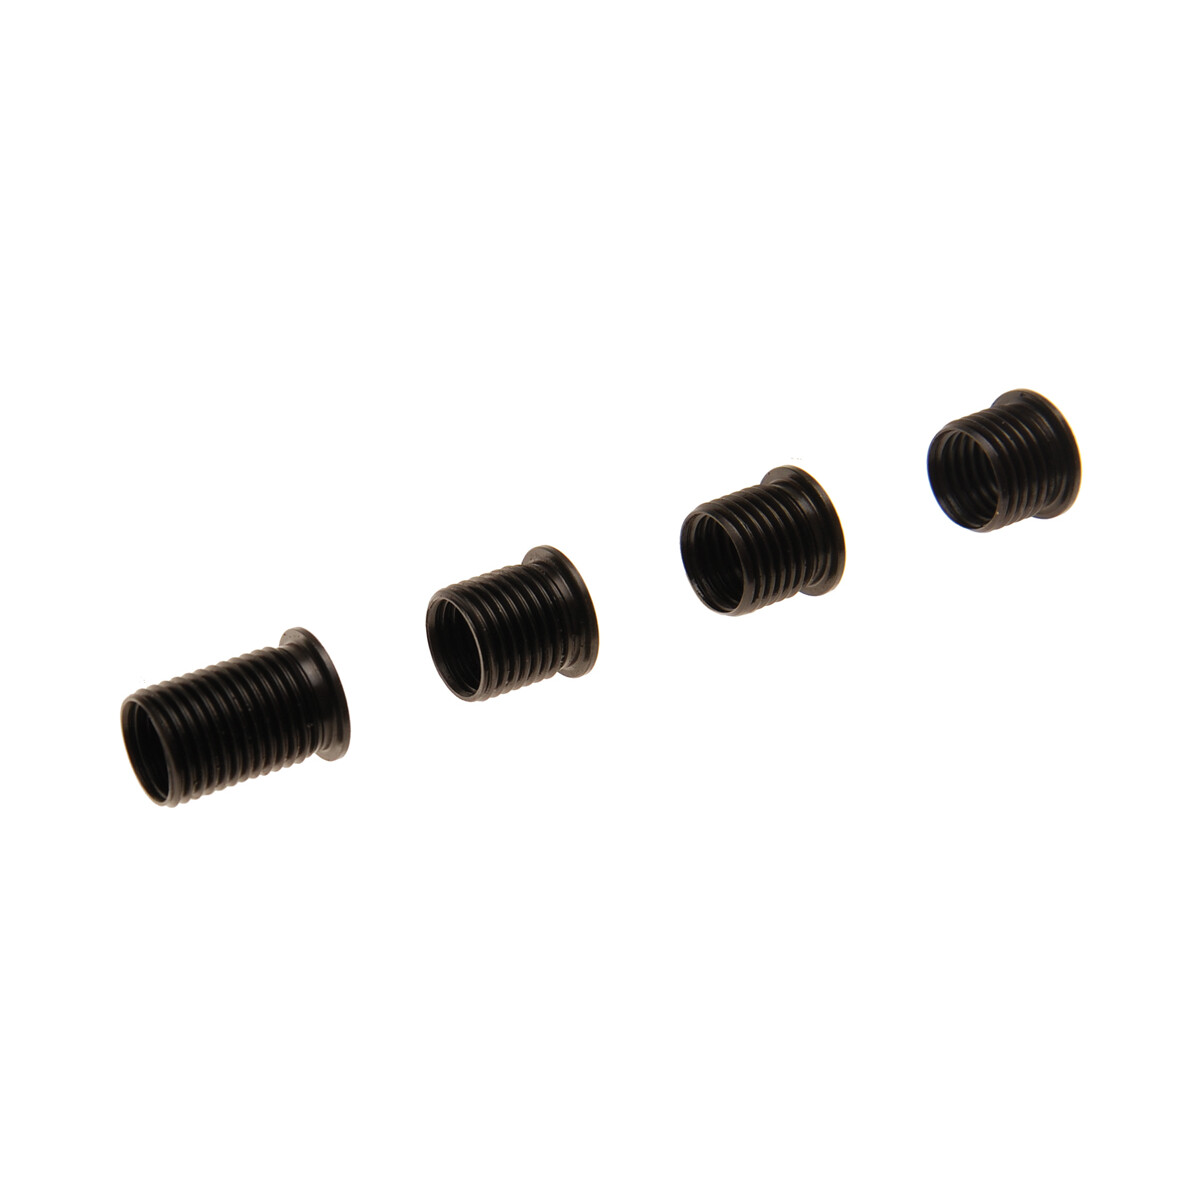 M10 x 1,00 x 12 mm Deep Spark Plug Thread Repair Insert Pro BGS 8650-1 